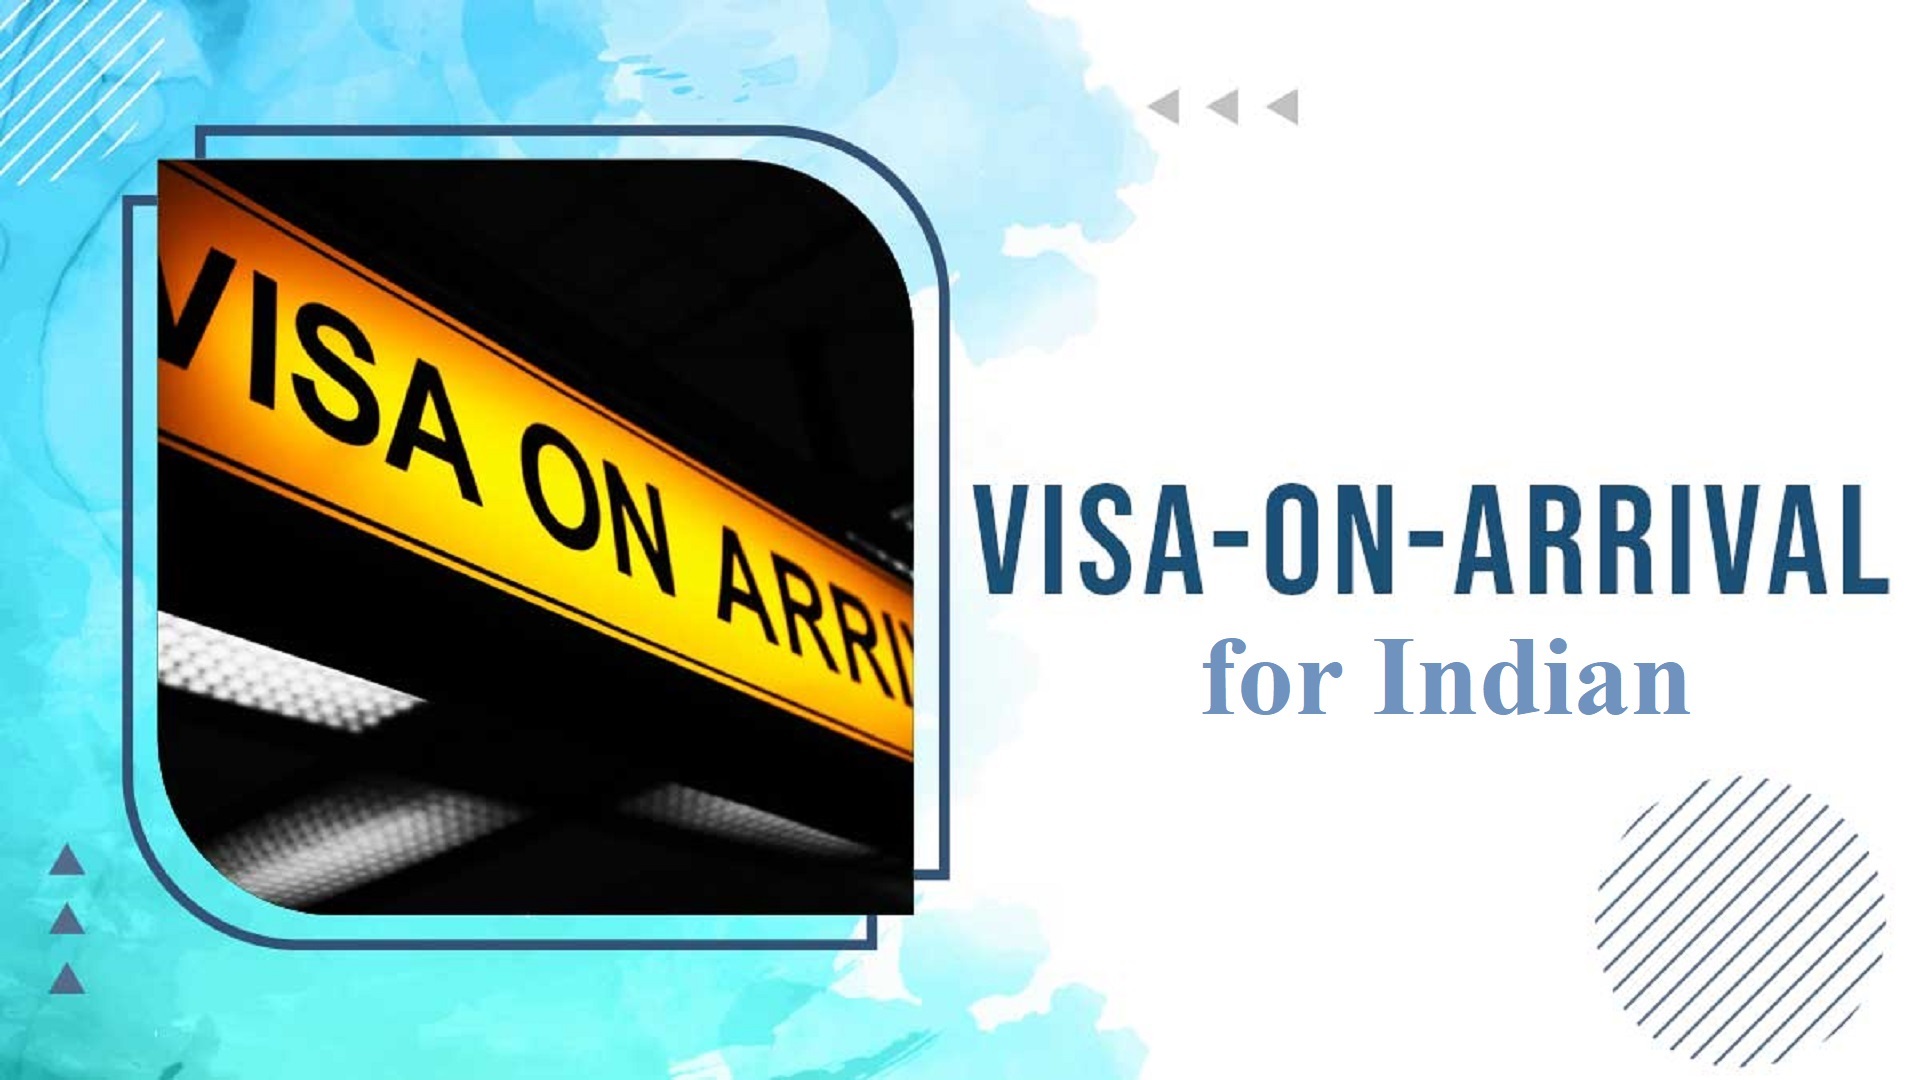 visa on arrival for indians, visa on arrival, indian visa, visa, visa free holidays, visa on arrival destinations, countries offering visa on arrival